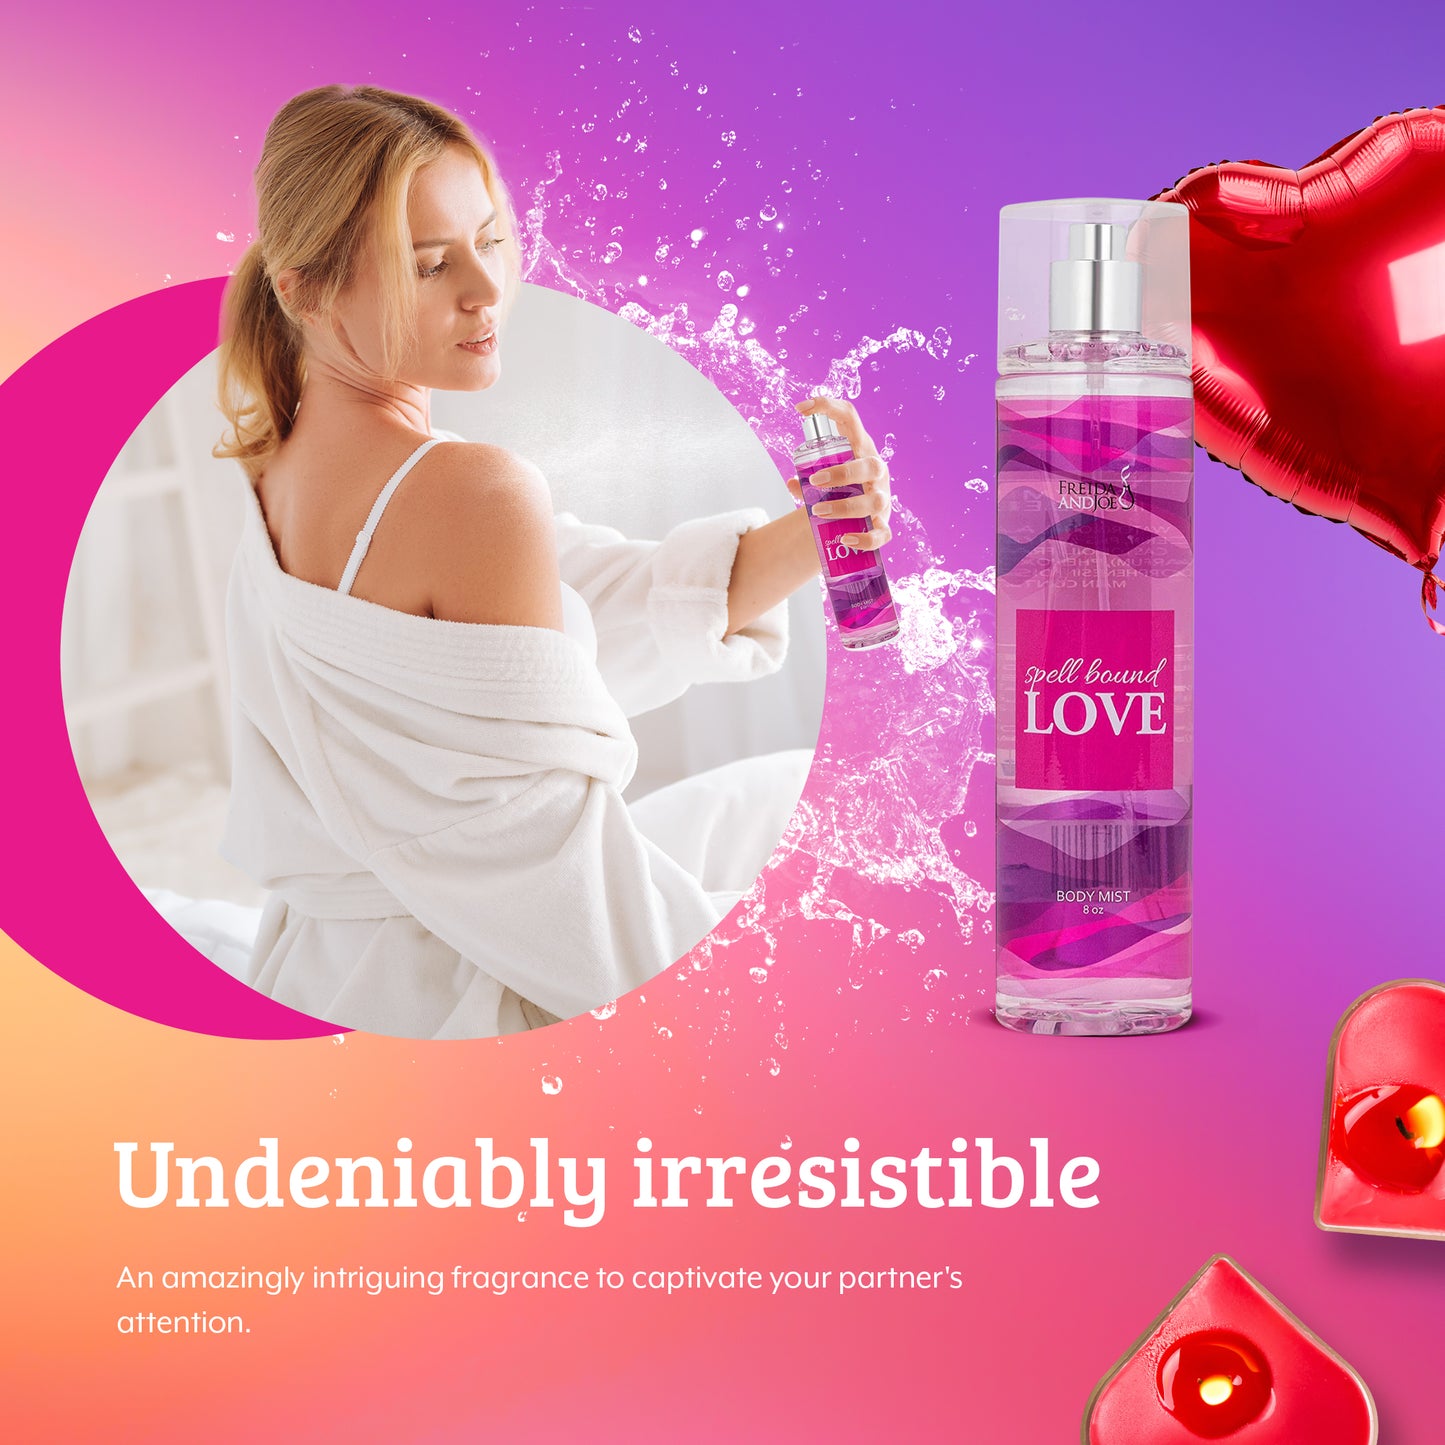 Spell Bound Love Fragrance Body Mist in 8oz Spray Bottle